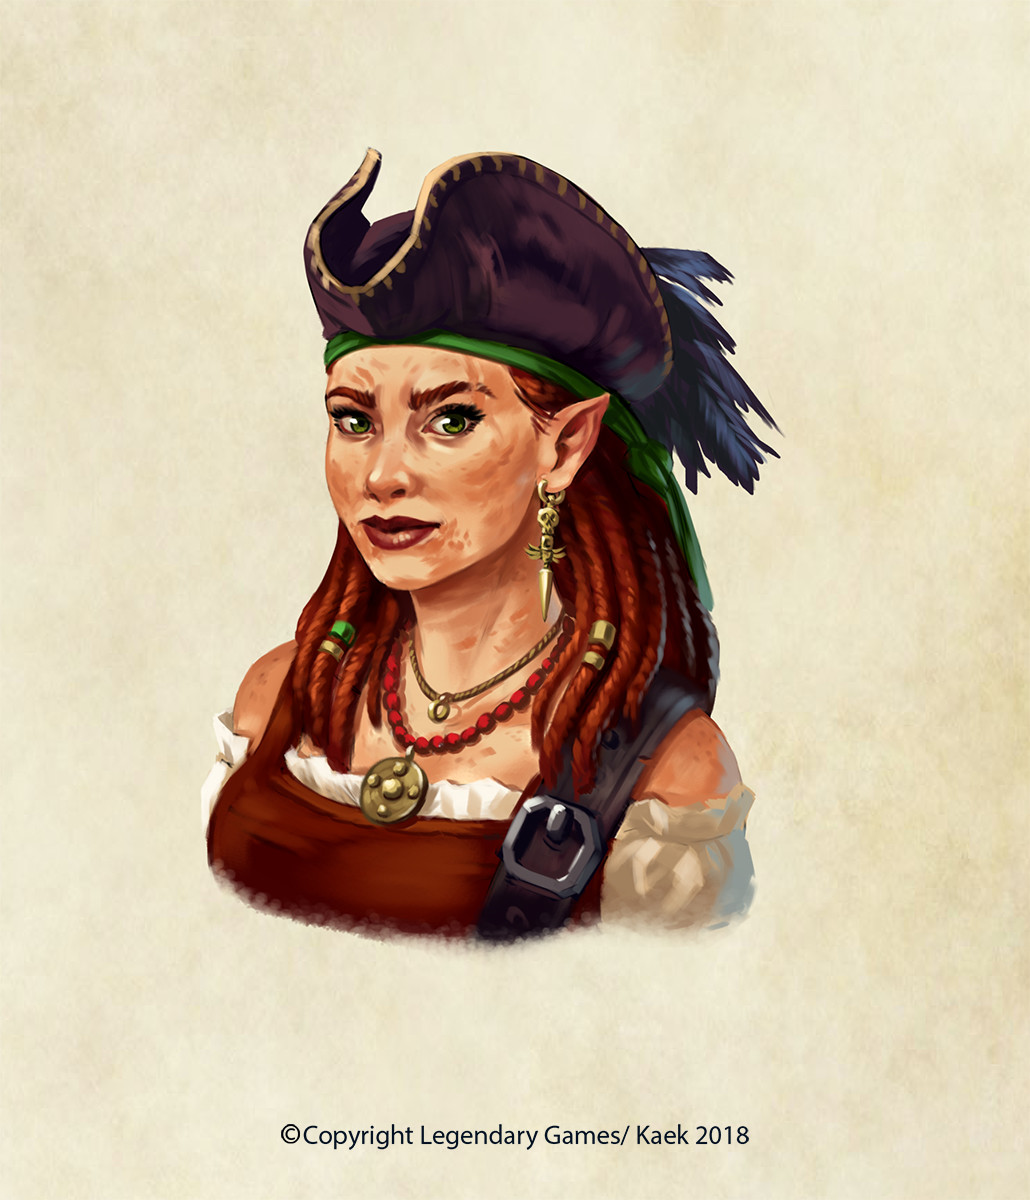 Pirate half-elf girl